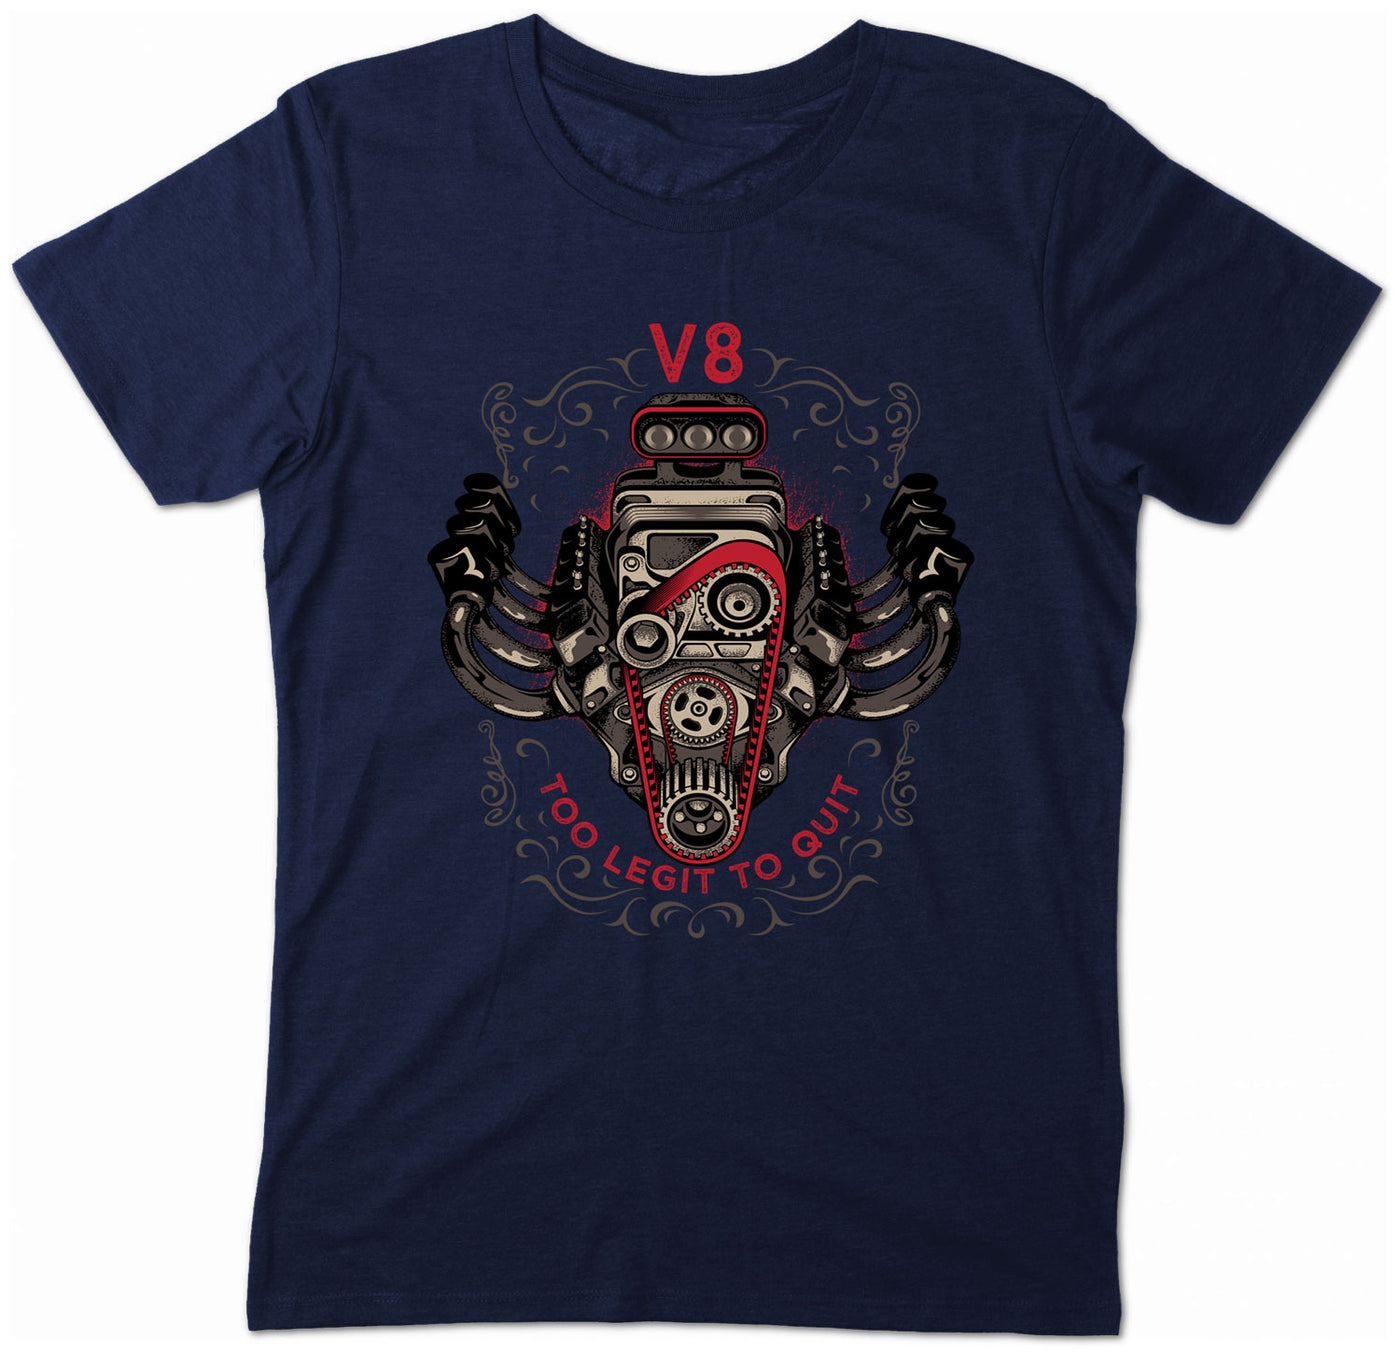 v8-hotrod-shirt-navy-dd51